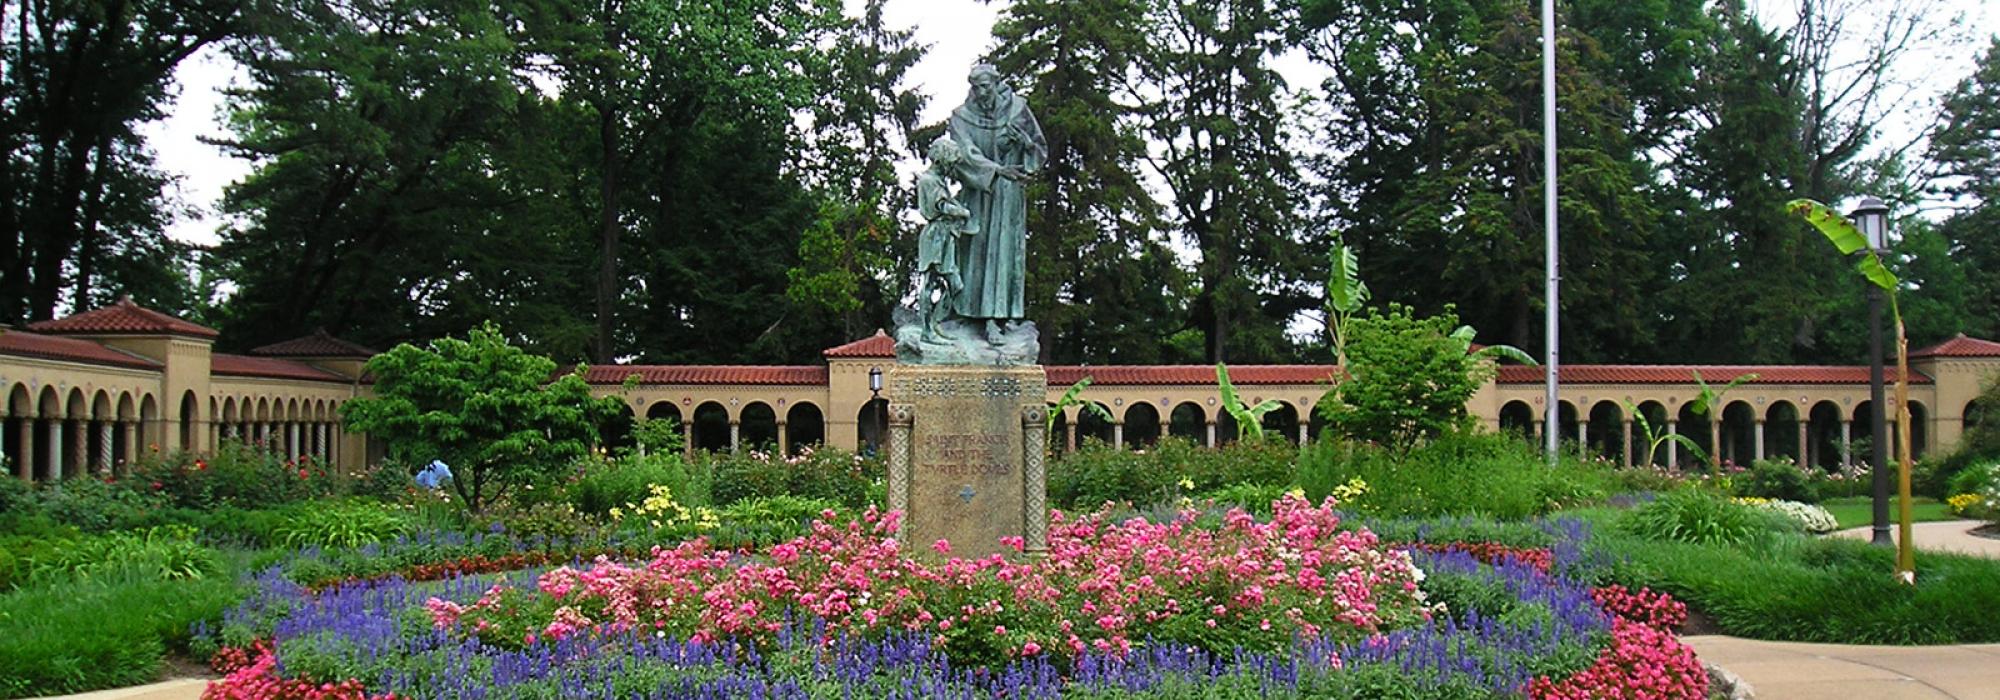 Franciscan Monastery of the Holy Land Garden, Washington, D.C.